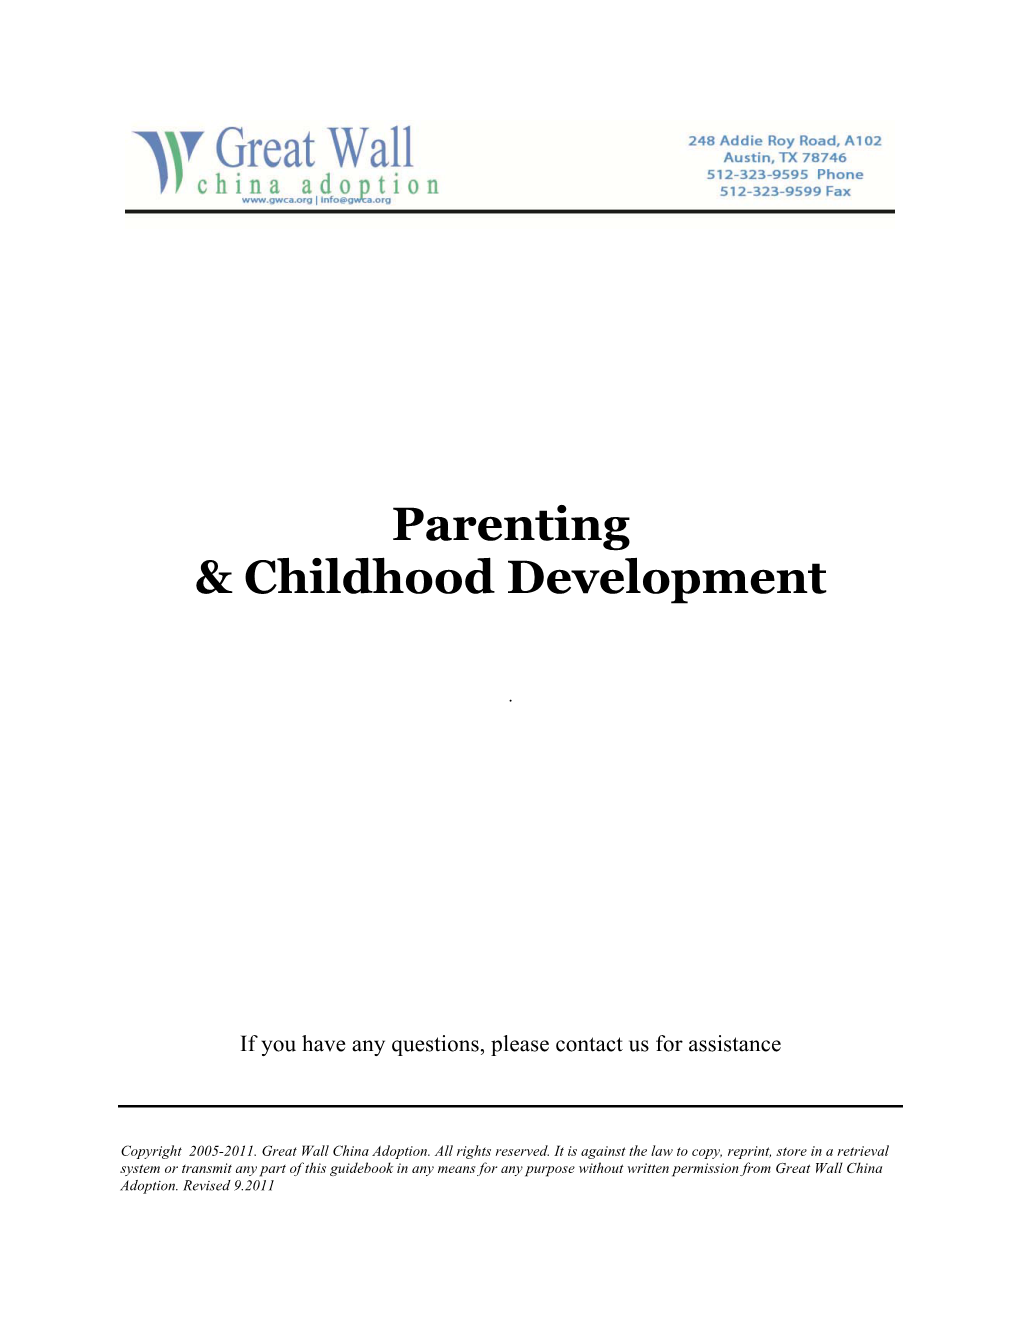 Parenting & Childhood Development